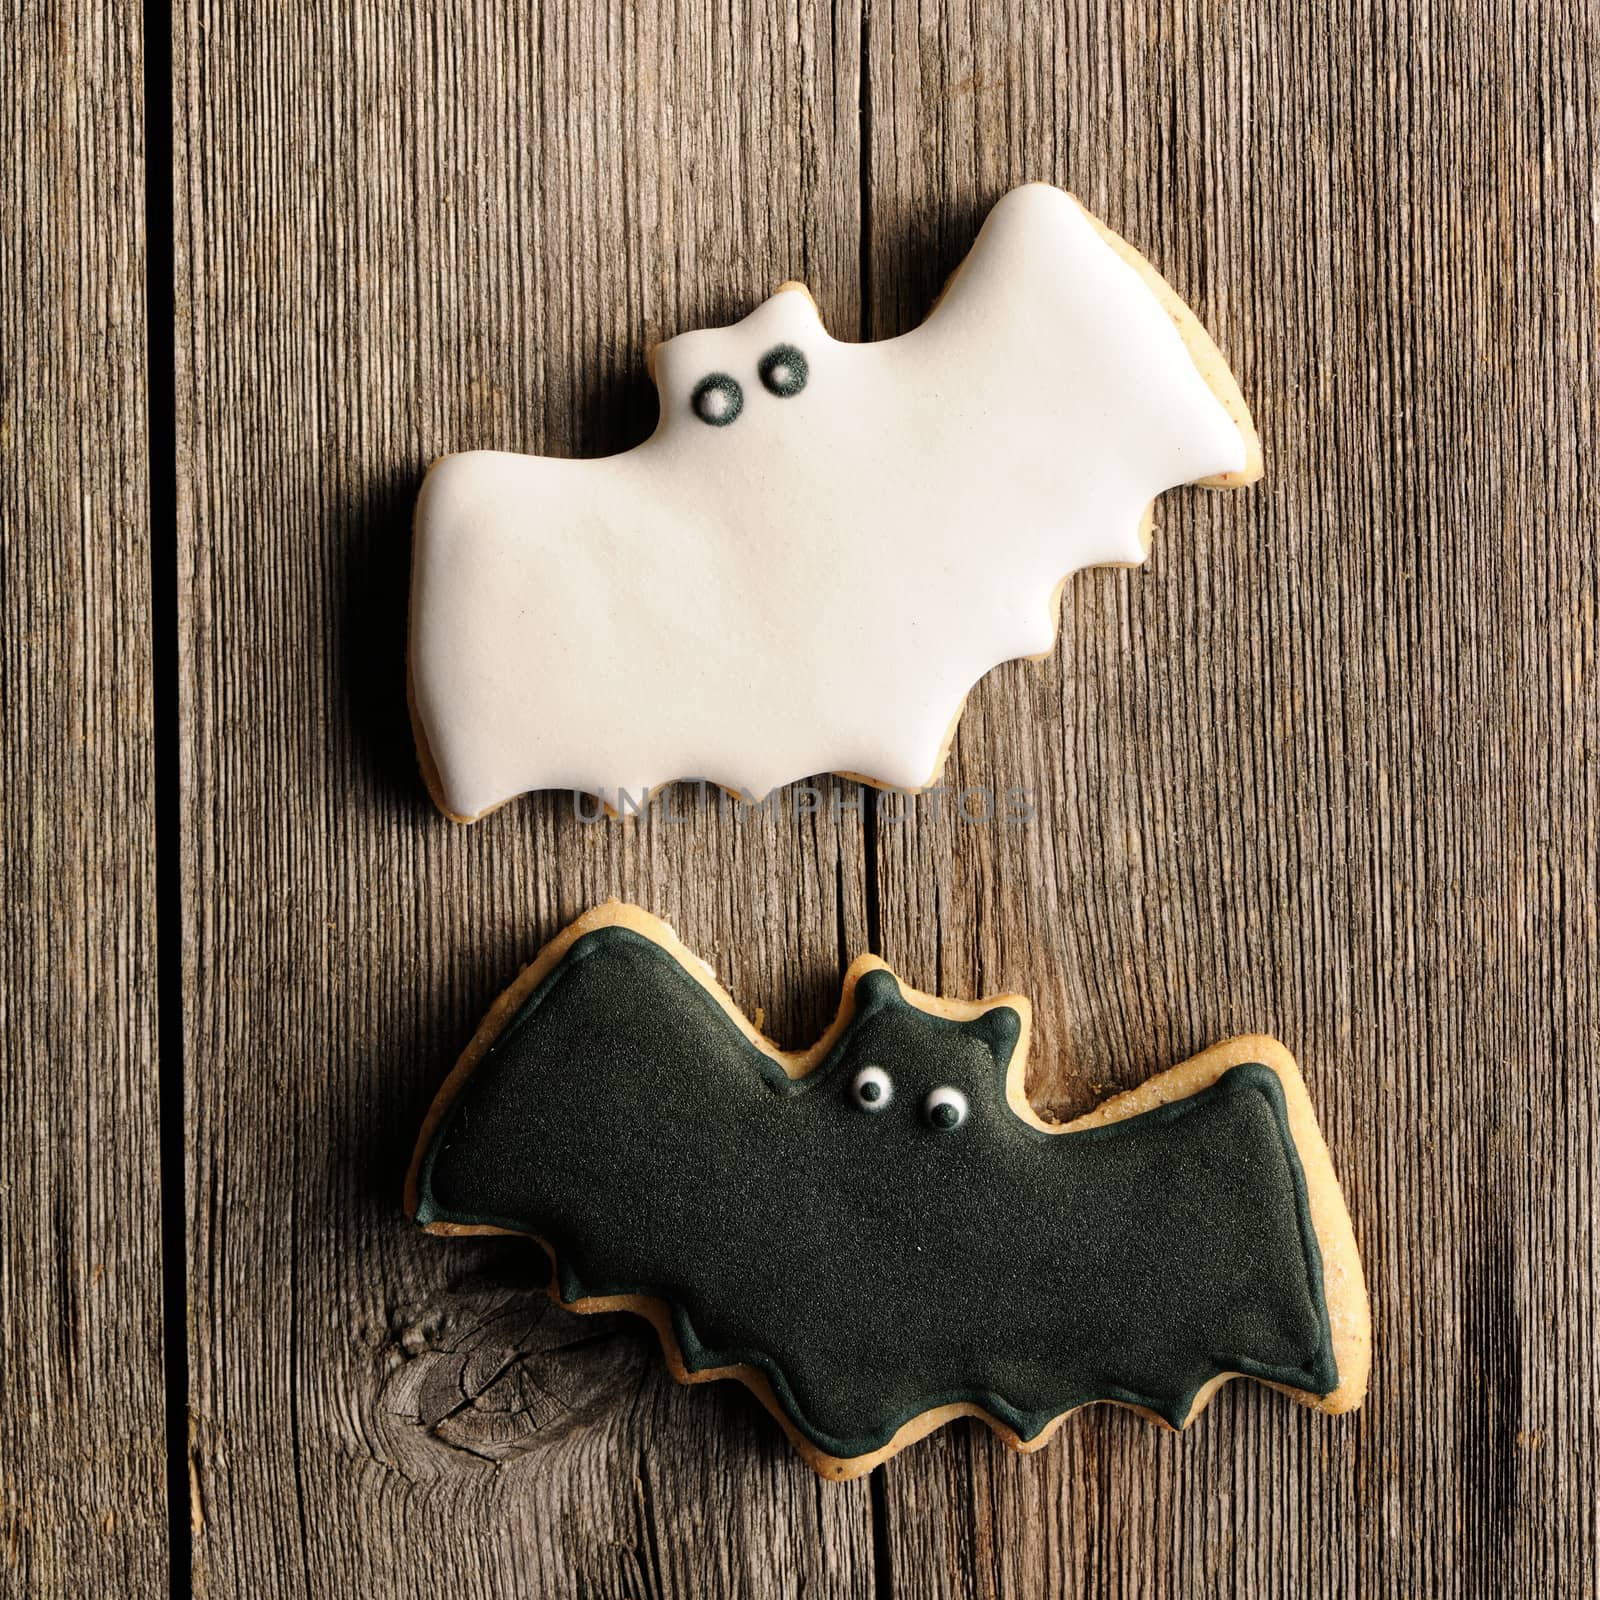 Halloween homemade gingerbread cookies by haveseen